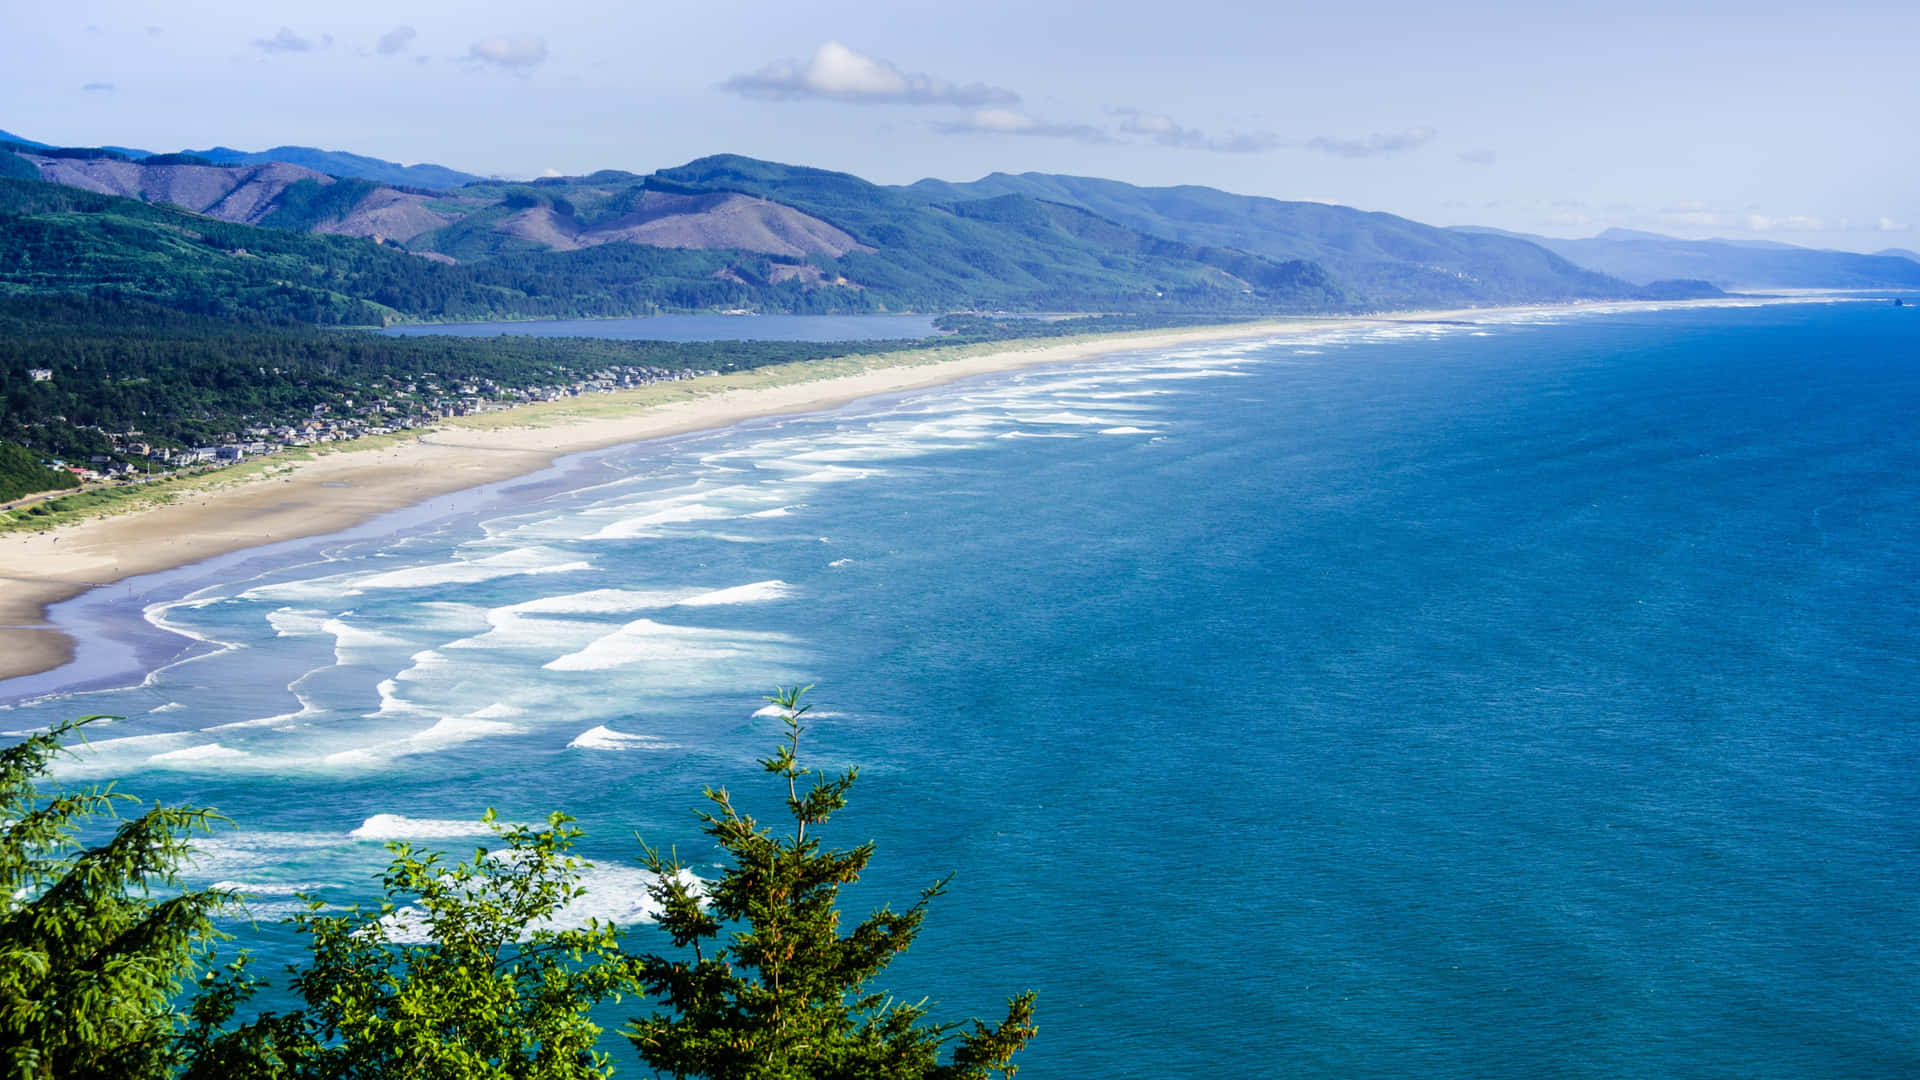 Enjoy the Splendid View of Oregon Coast